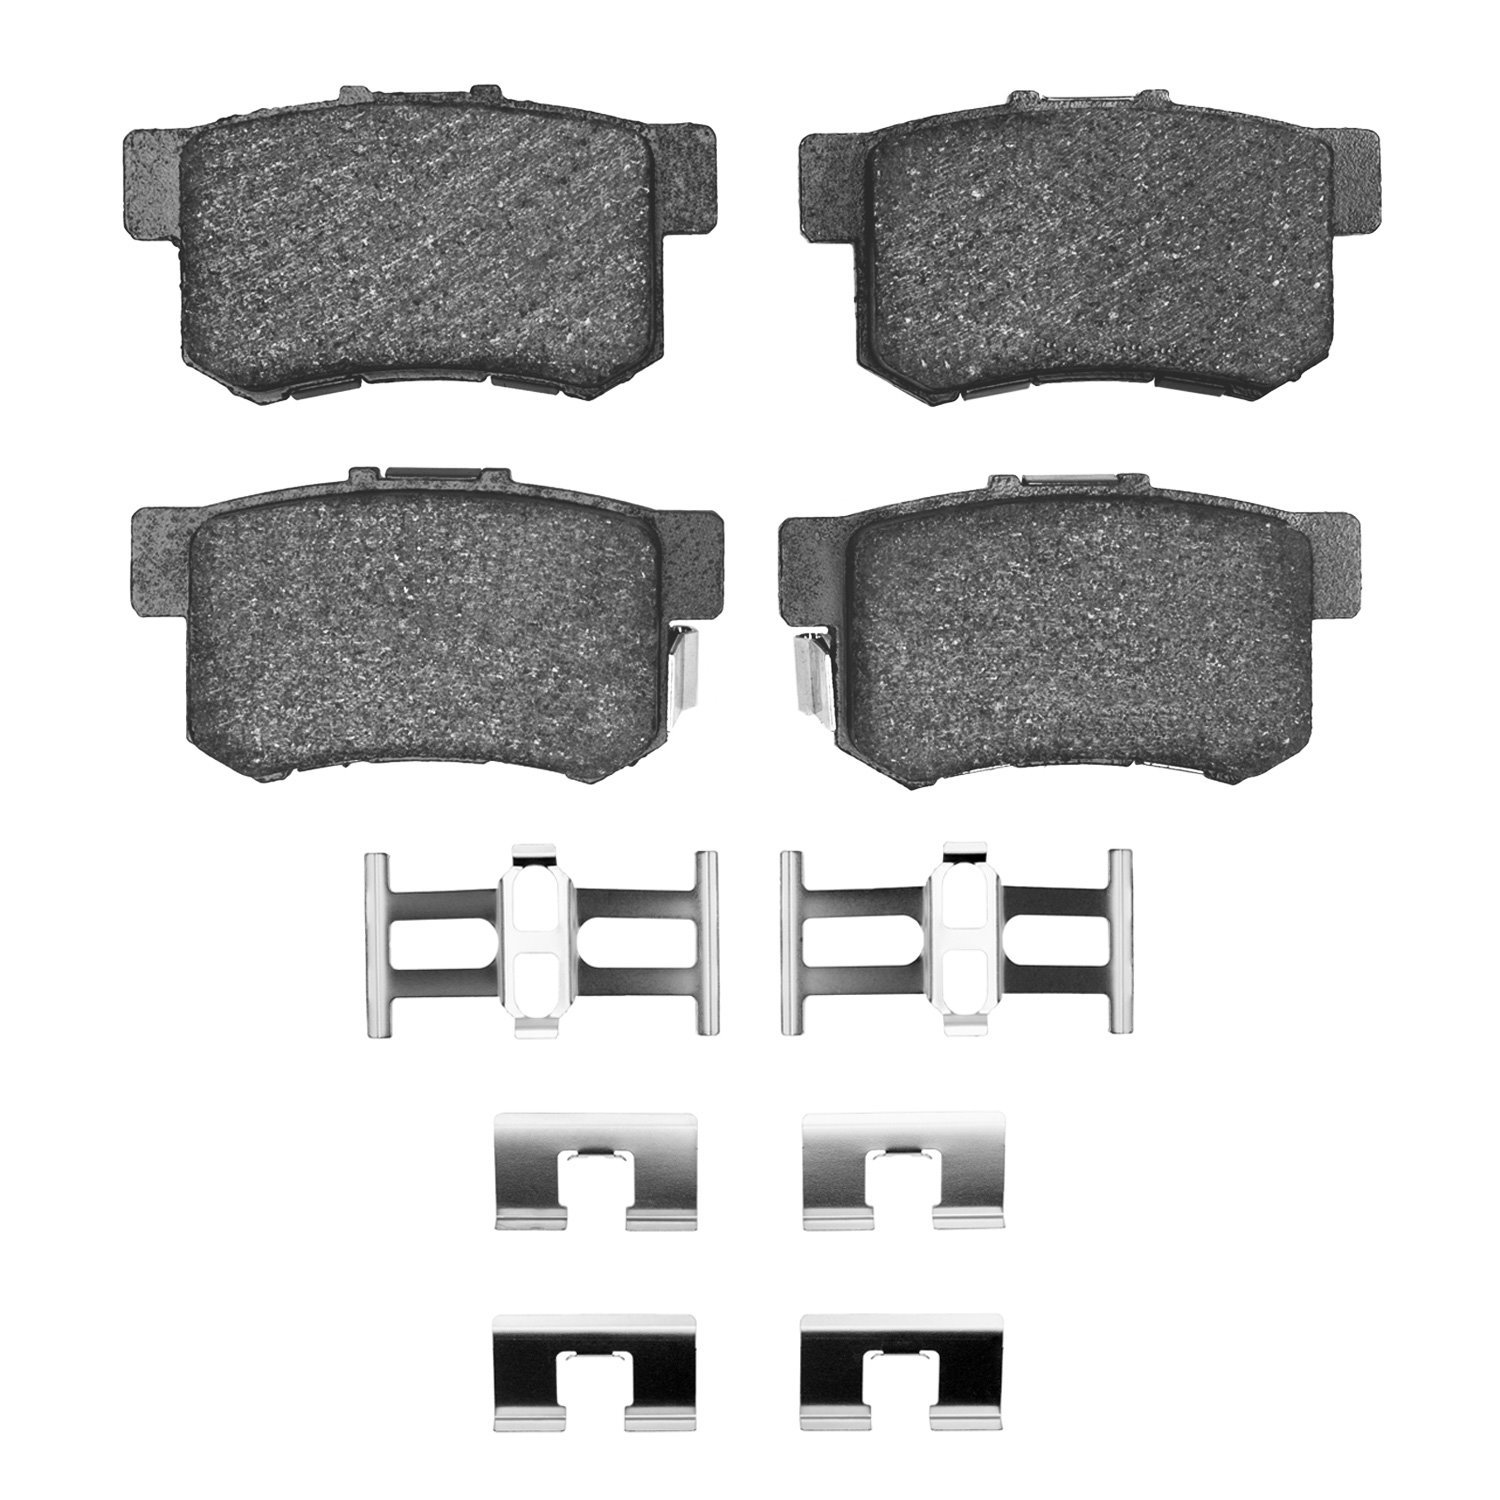 1310-0536-01 3000-Series Ceramic Brake Pads & Hardware Kit, 1991-2012 Multiple Makes/Models, Position: Rear